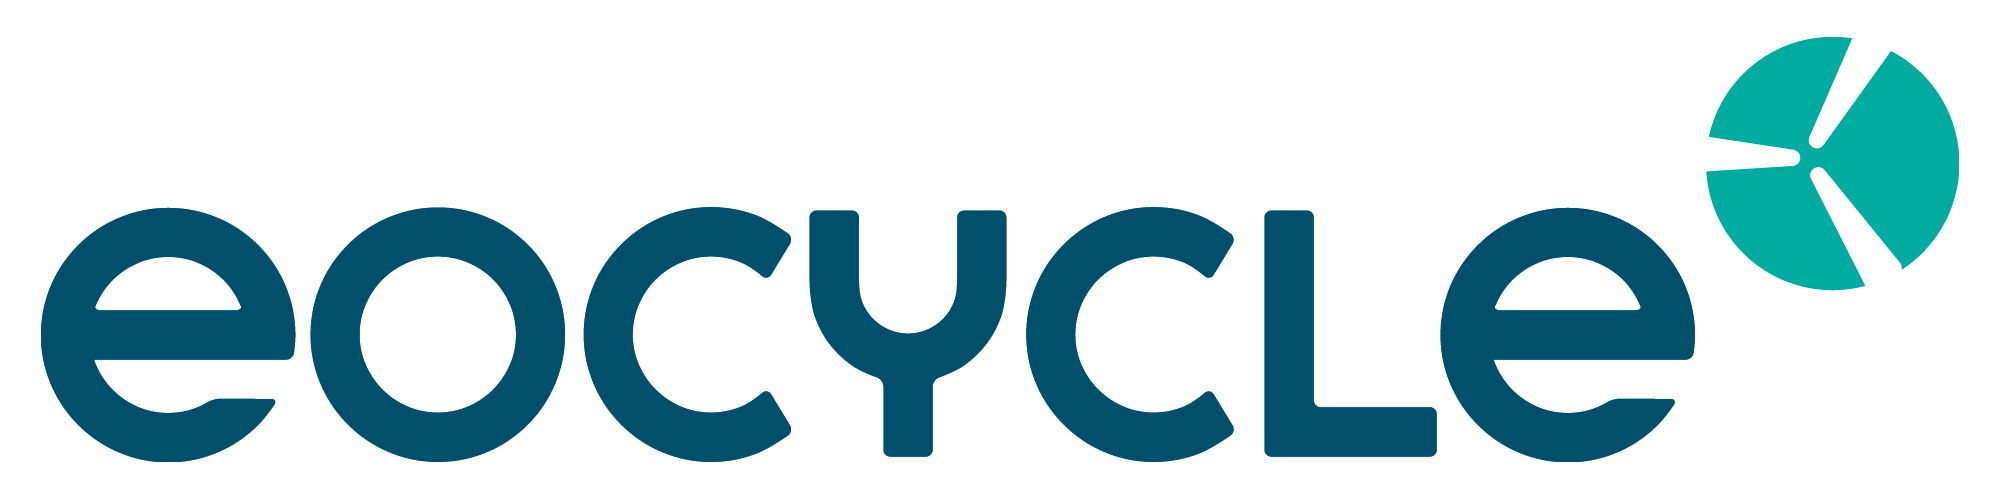 Eocycle logo